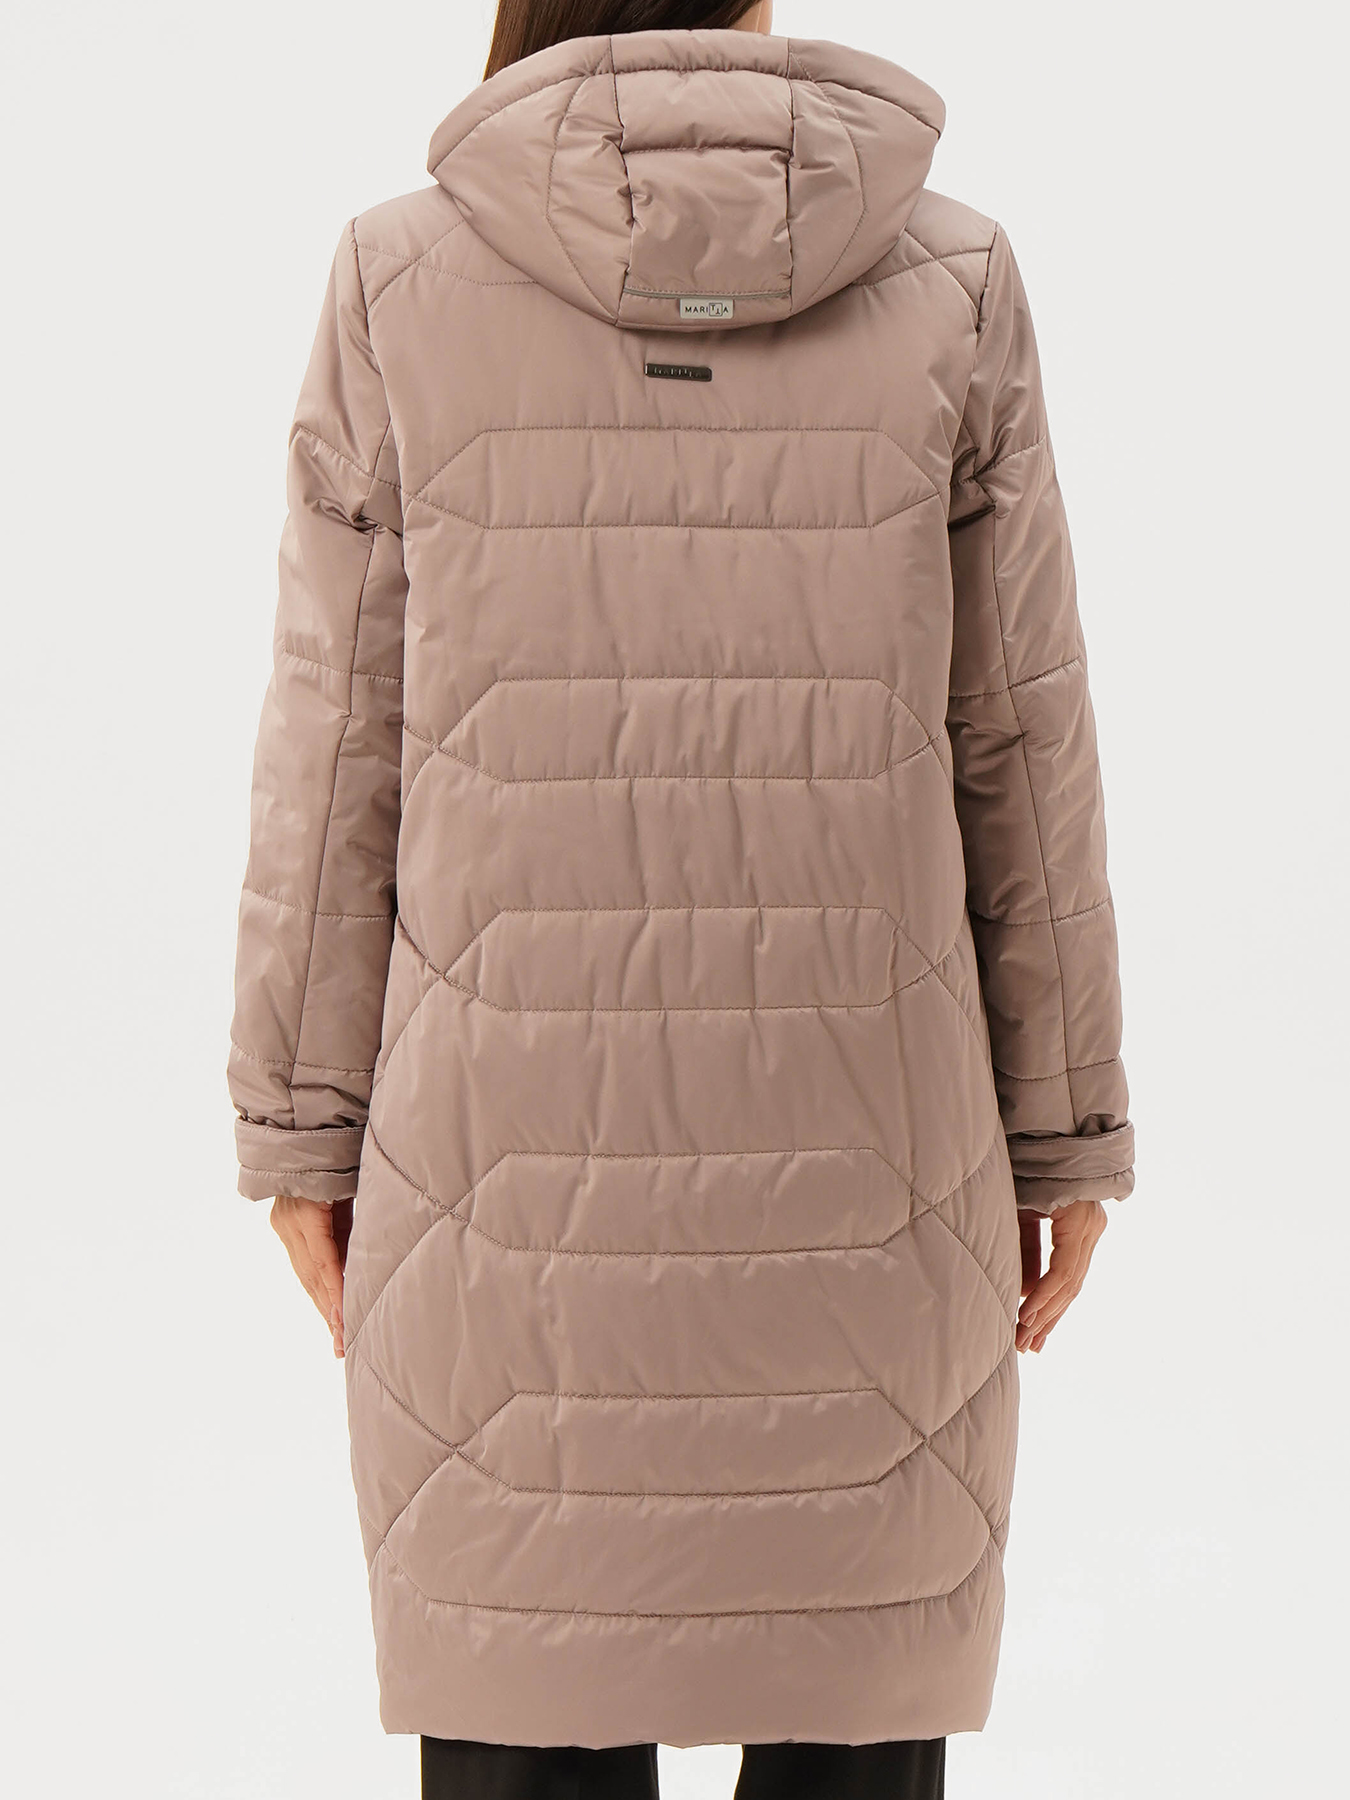 Пальто зимнее Maritta 433520-021, цвет бежевый, размер 46 - фото 6